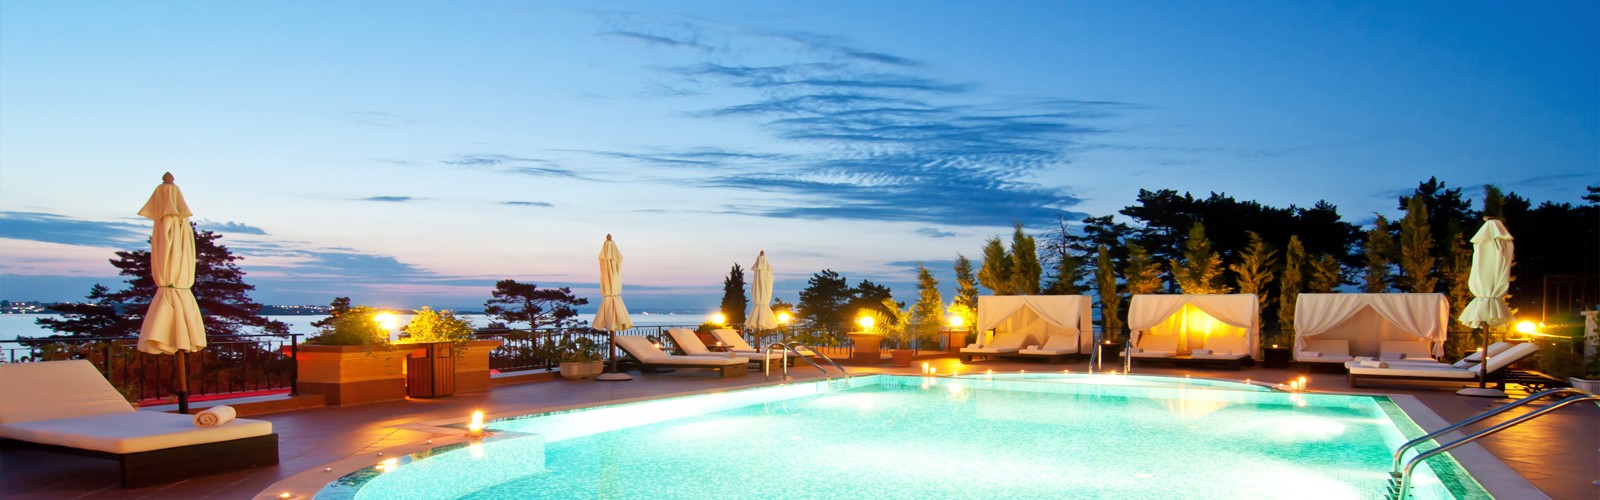 Top 5 resort pools - Holiday resort pool header